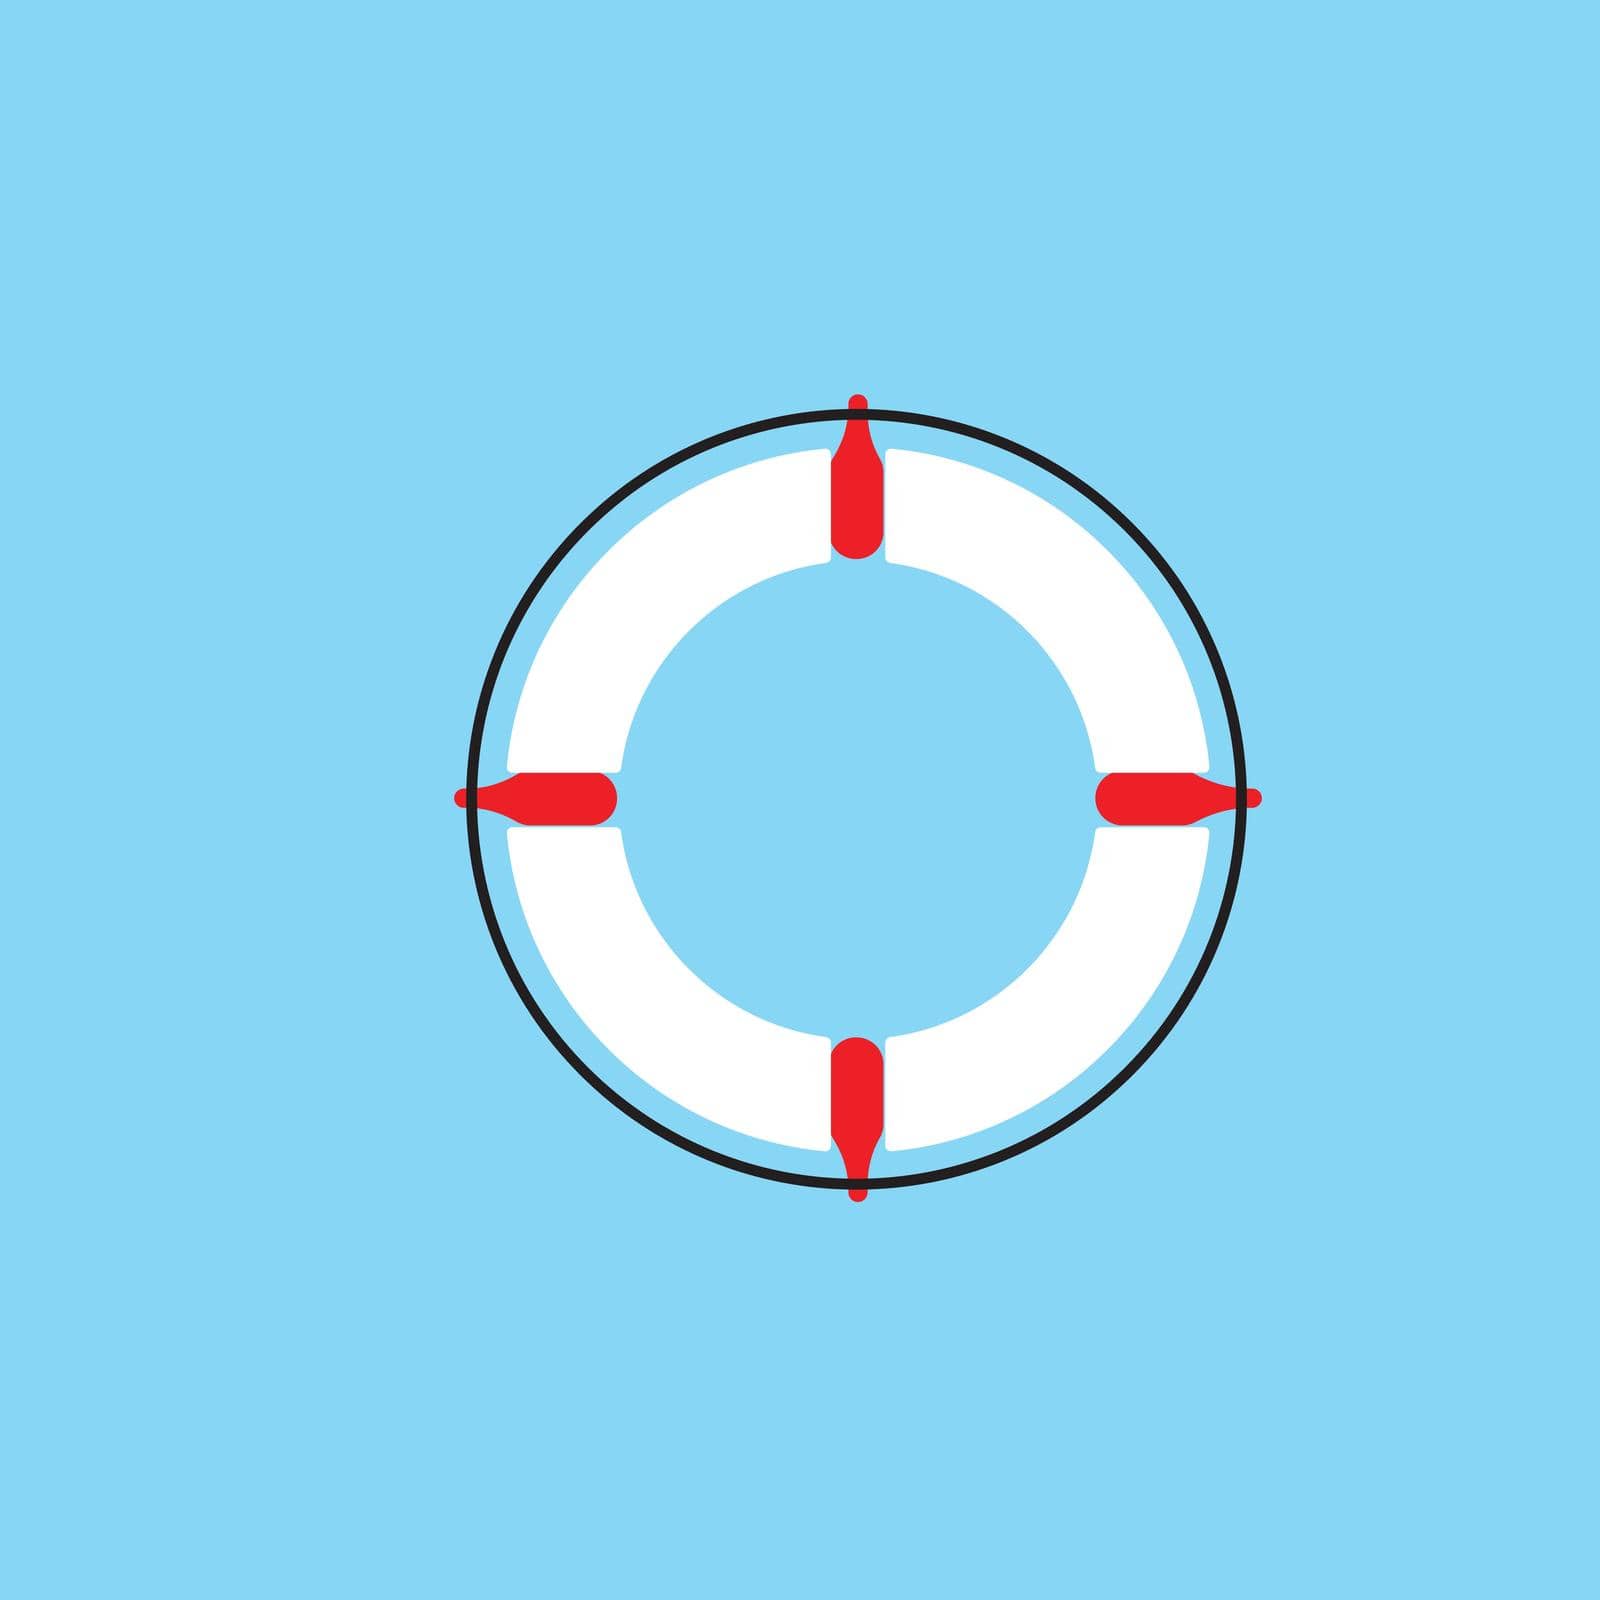 Lifebuoy logo icon vector ilustration by Mrsongrphc